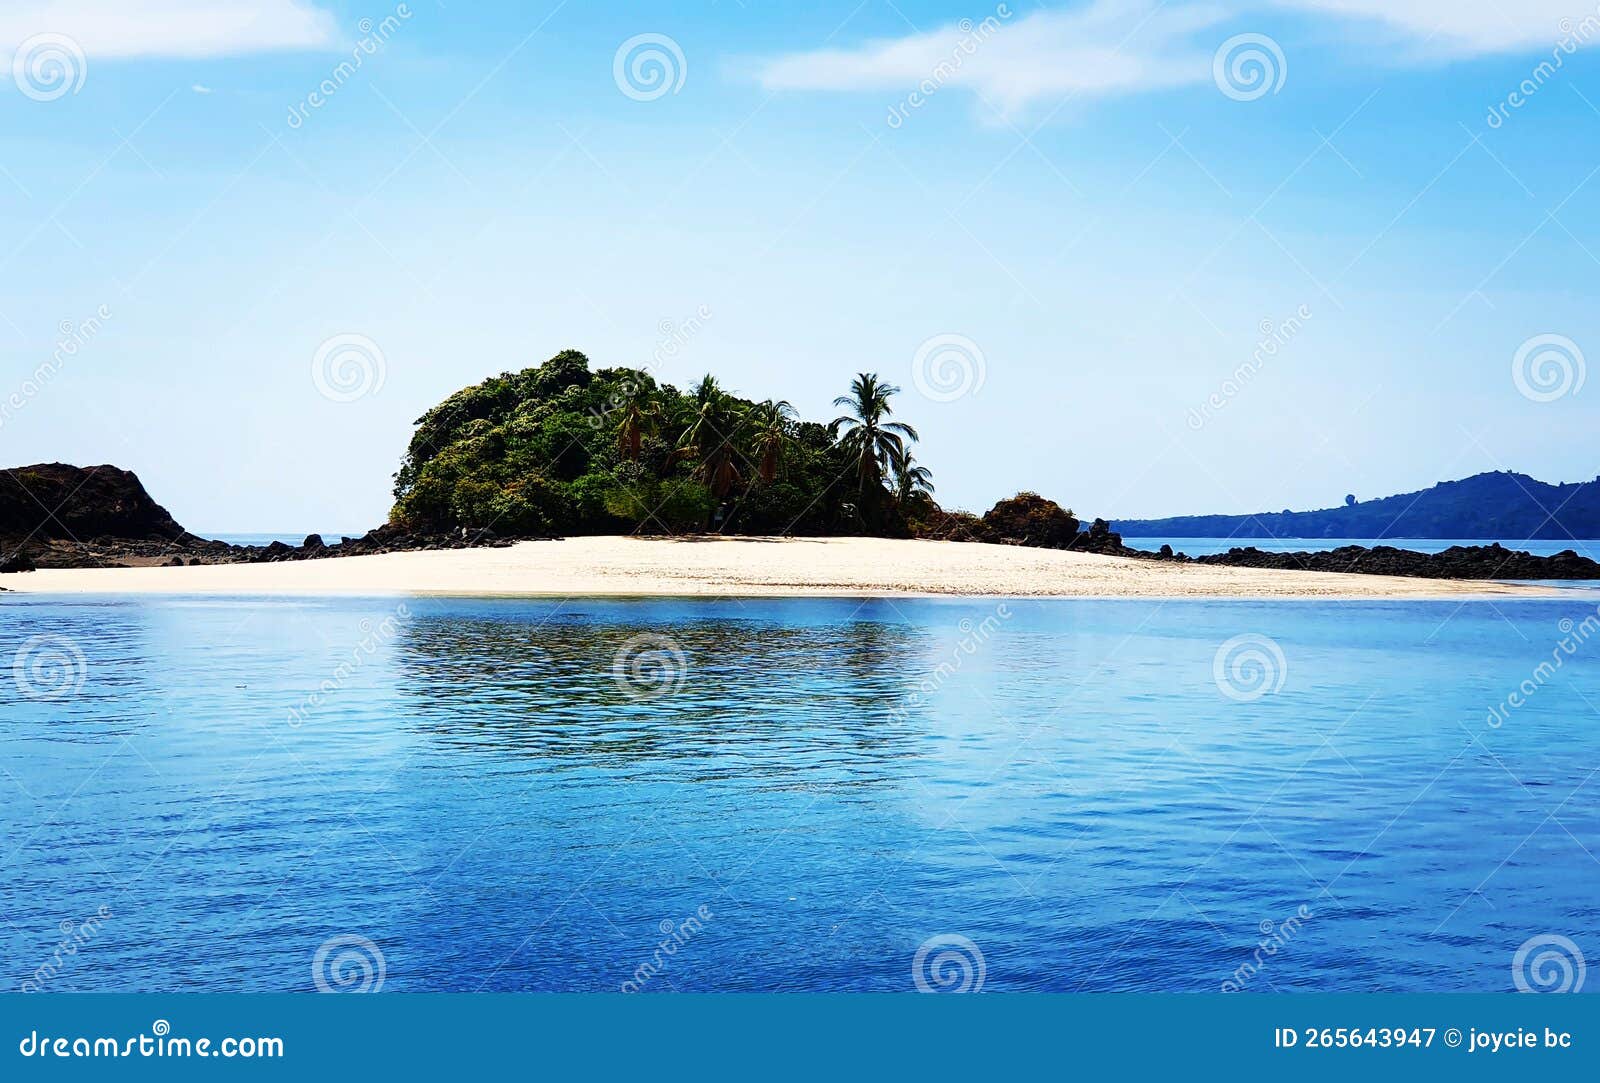 granito d'oro. coiba, panama. tropical beaches, island, palmtrees